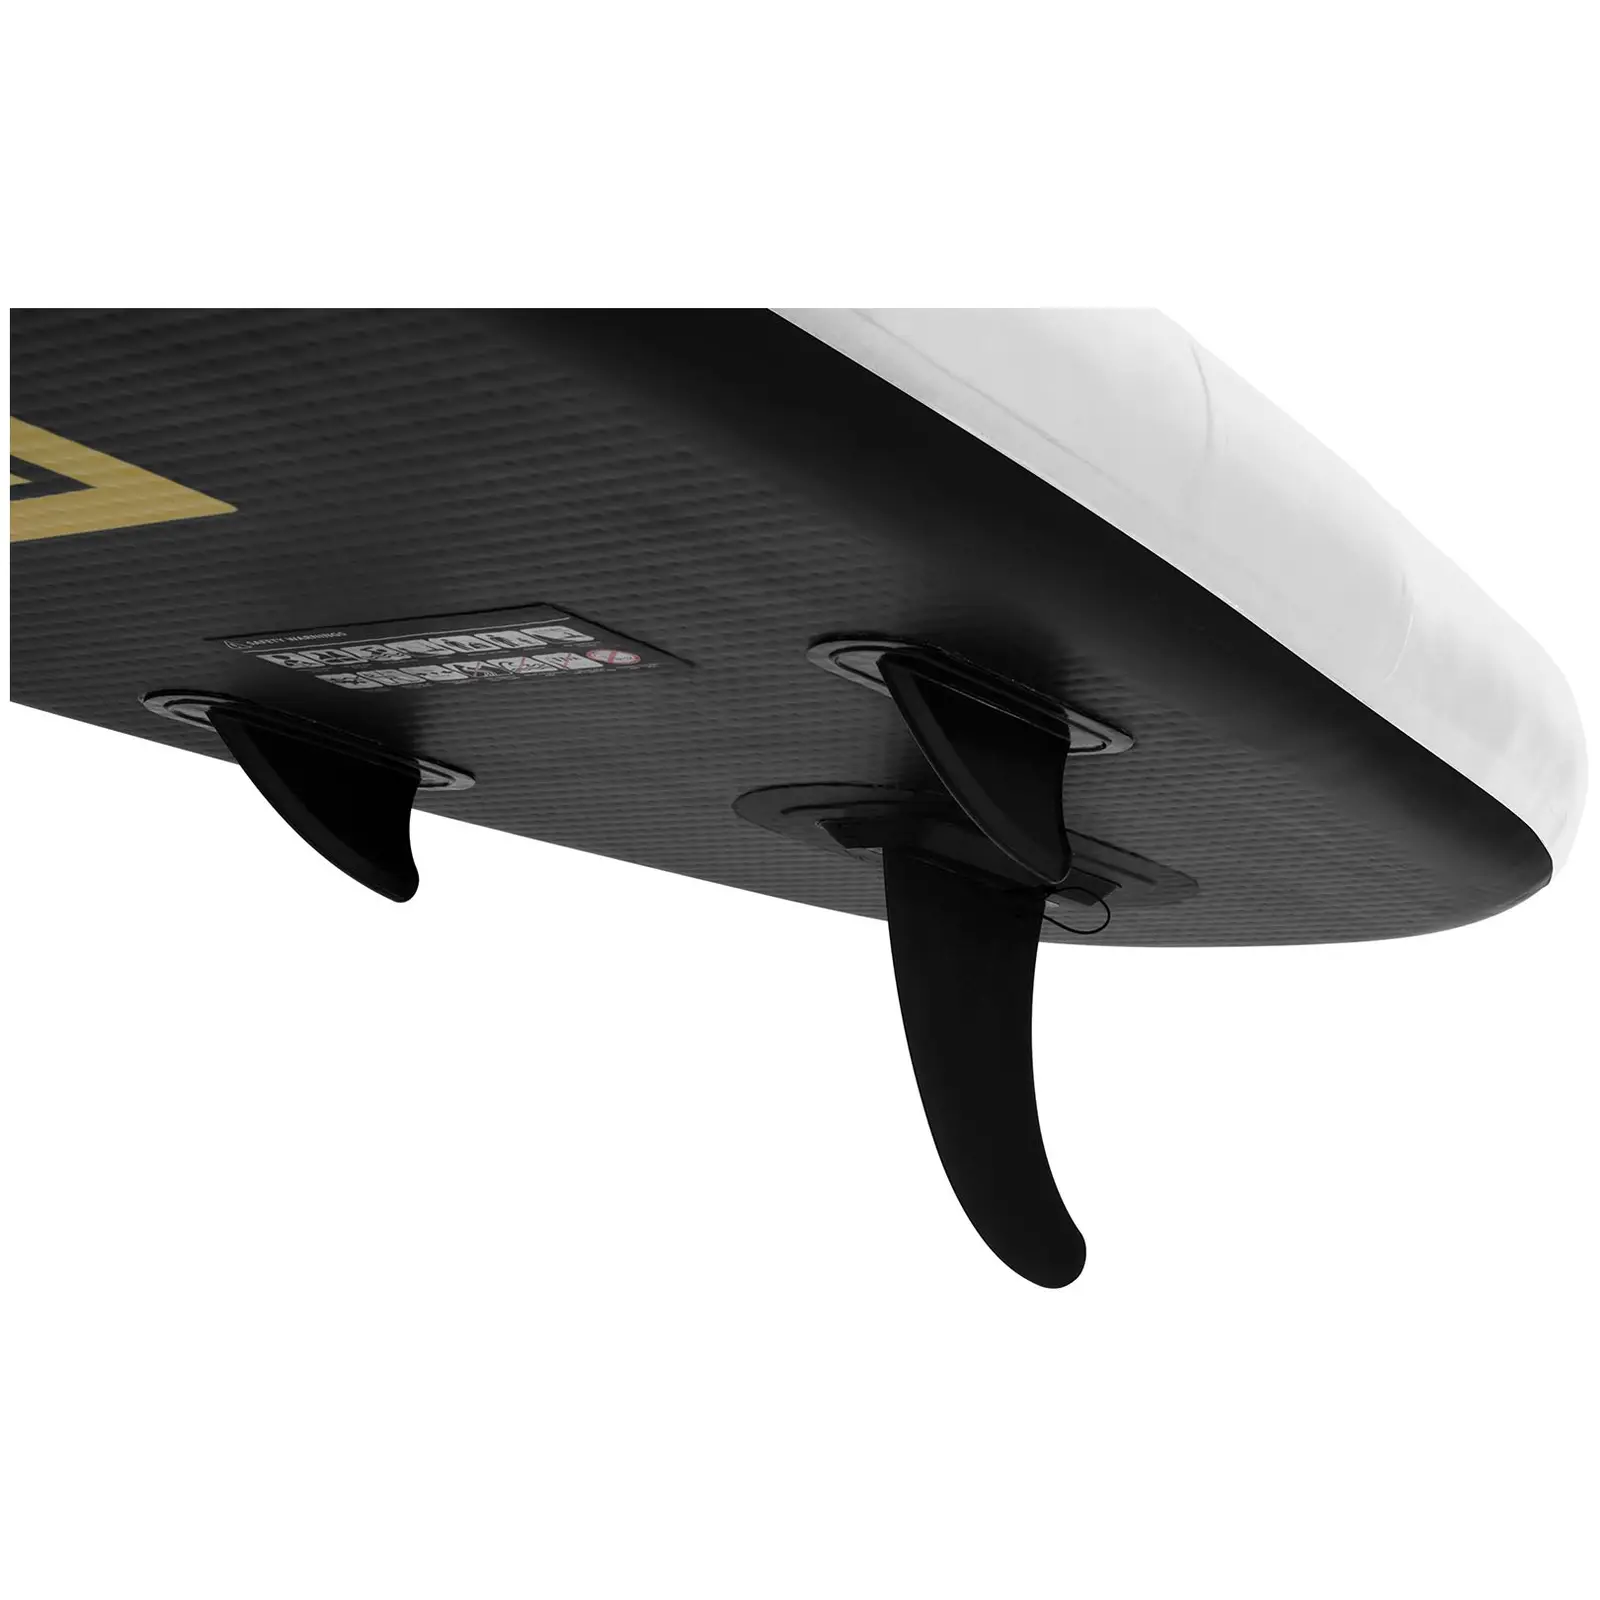 Nafukovací stand up paddleboard - sada - 145 kg - 335 x 71 x 15 cm